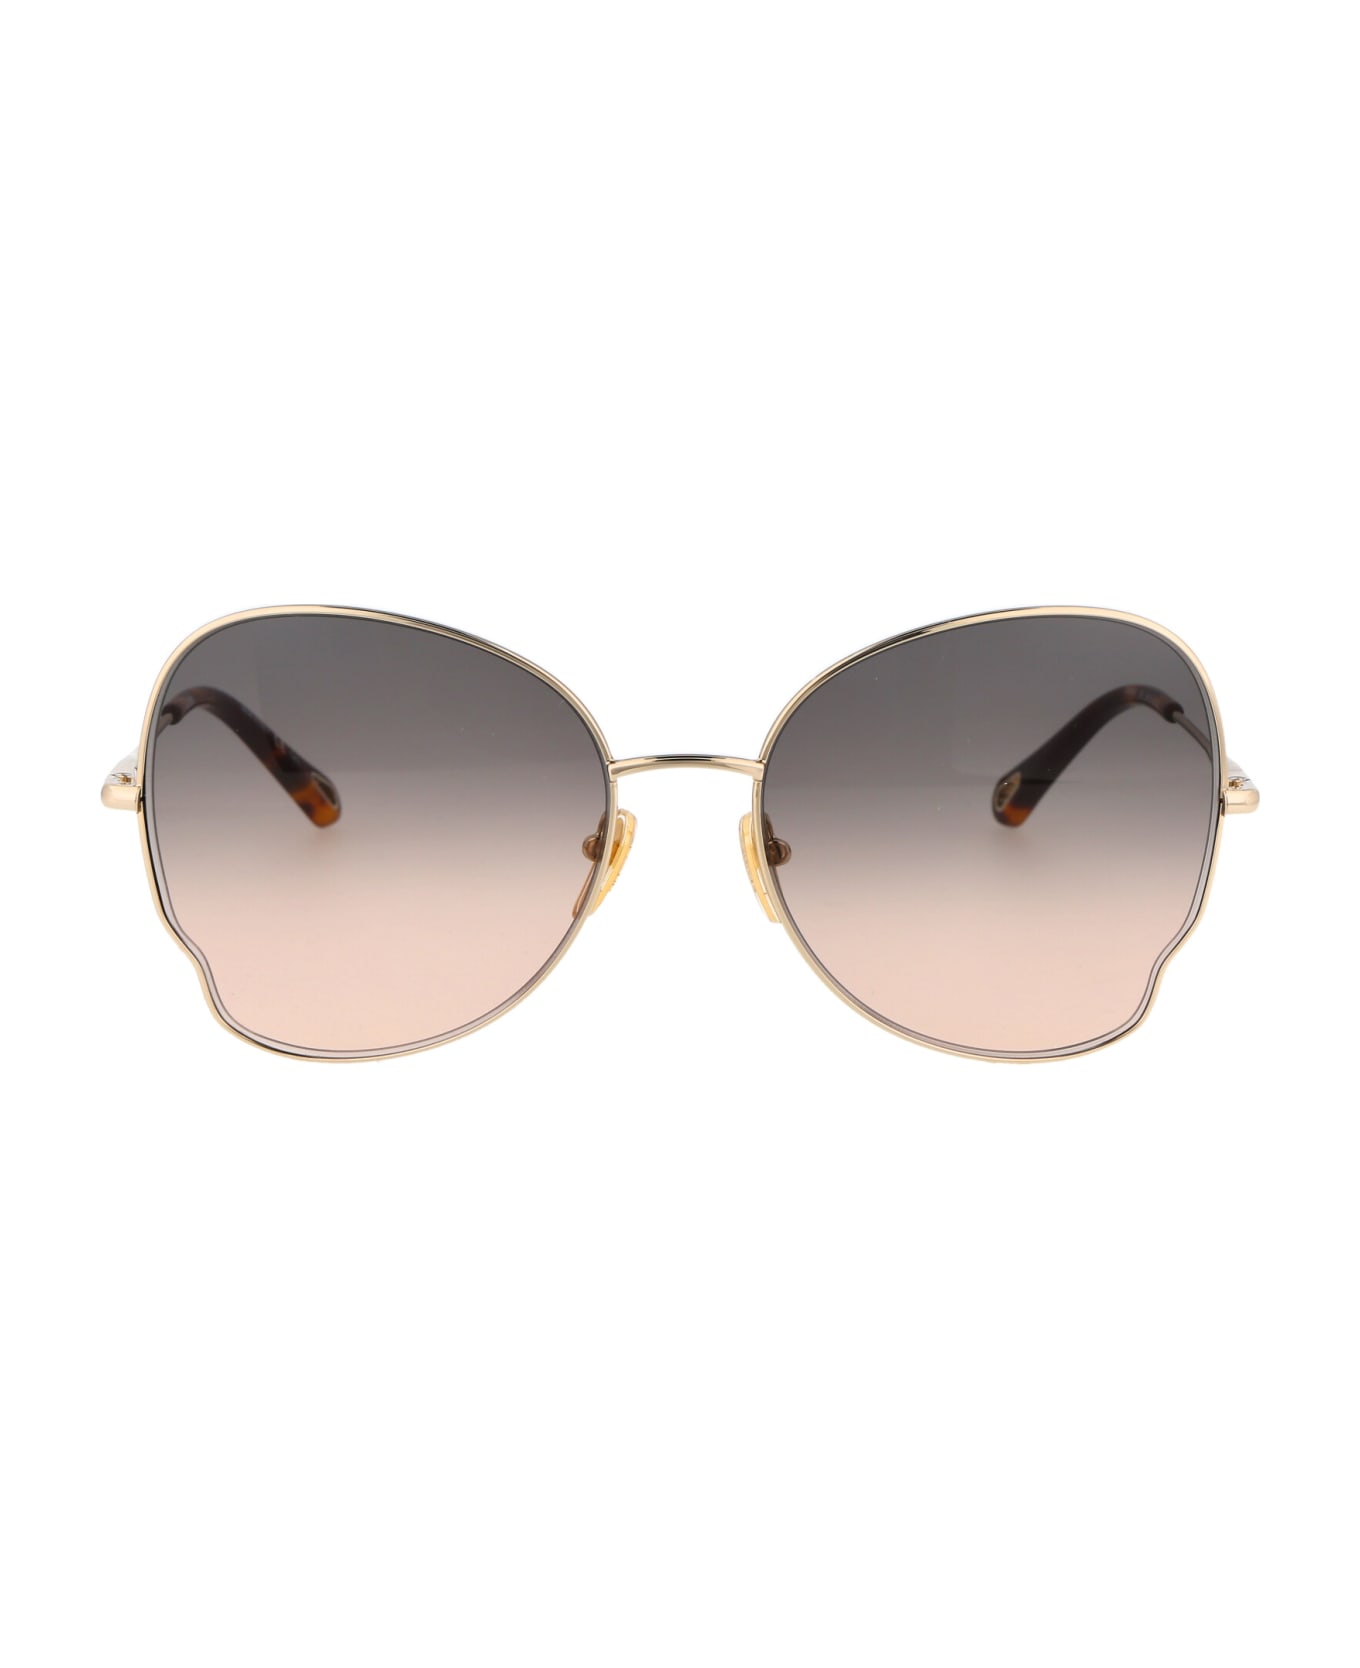 Chloé Eyewear Ch0094s Sunglasses - 001 GOLD GOLD BROWN